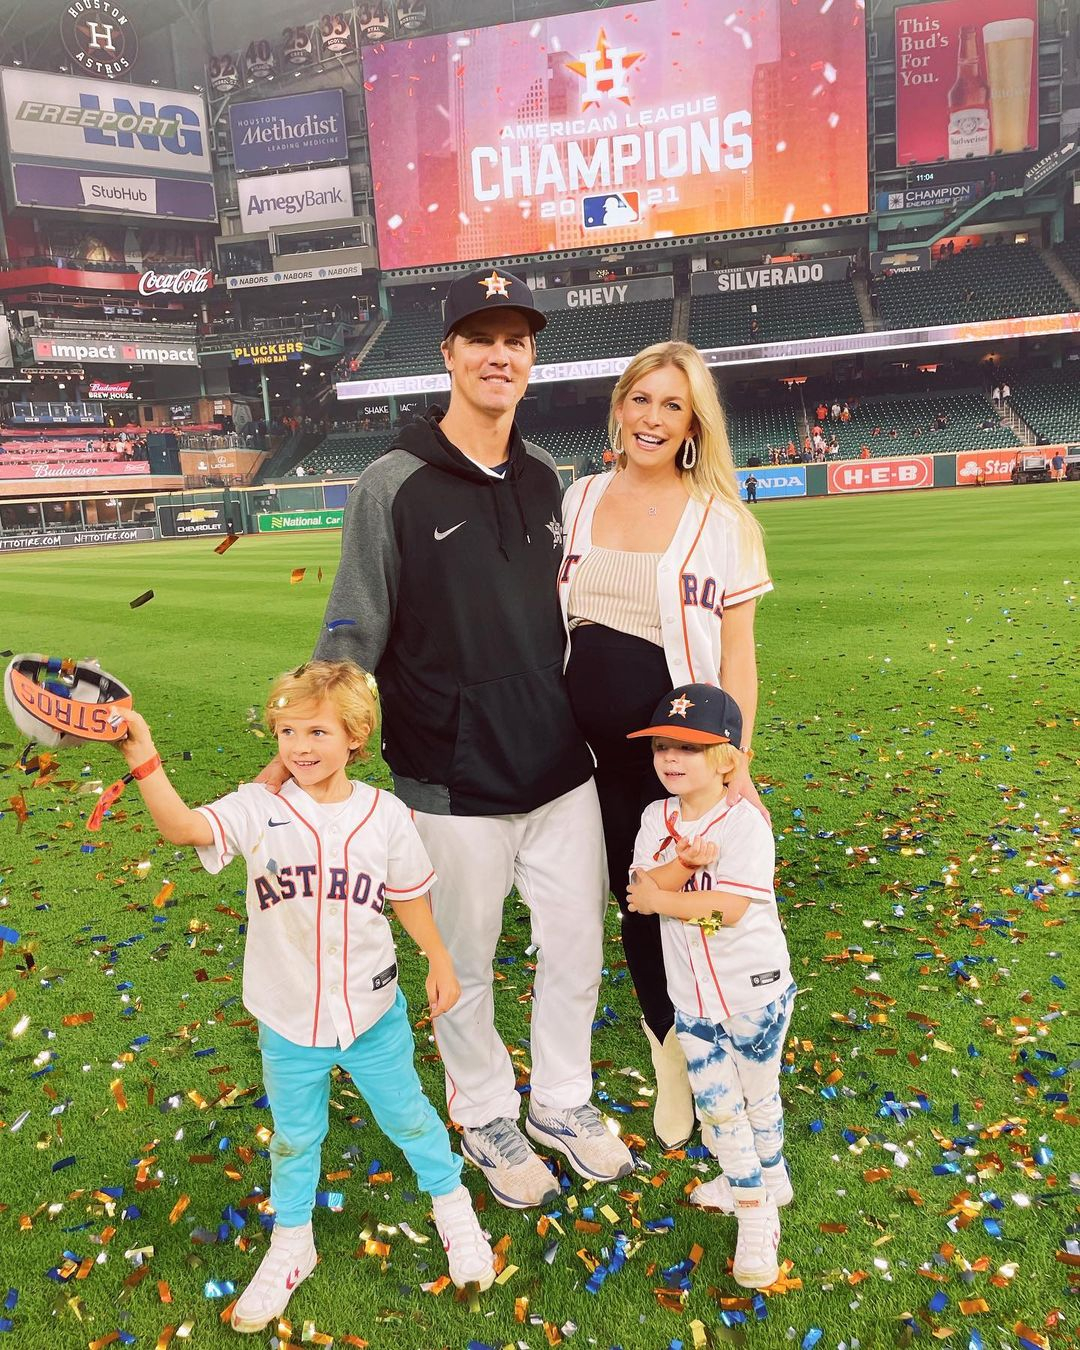 Anna Riley, wife of Braves player Austin Riley, talks MLB, family